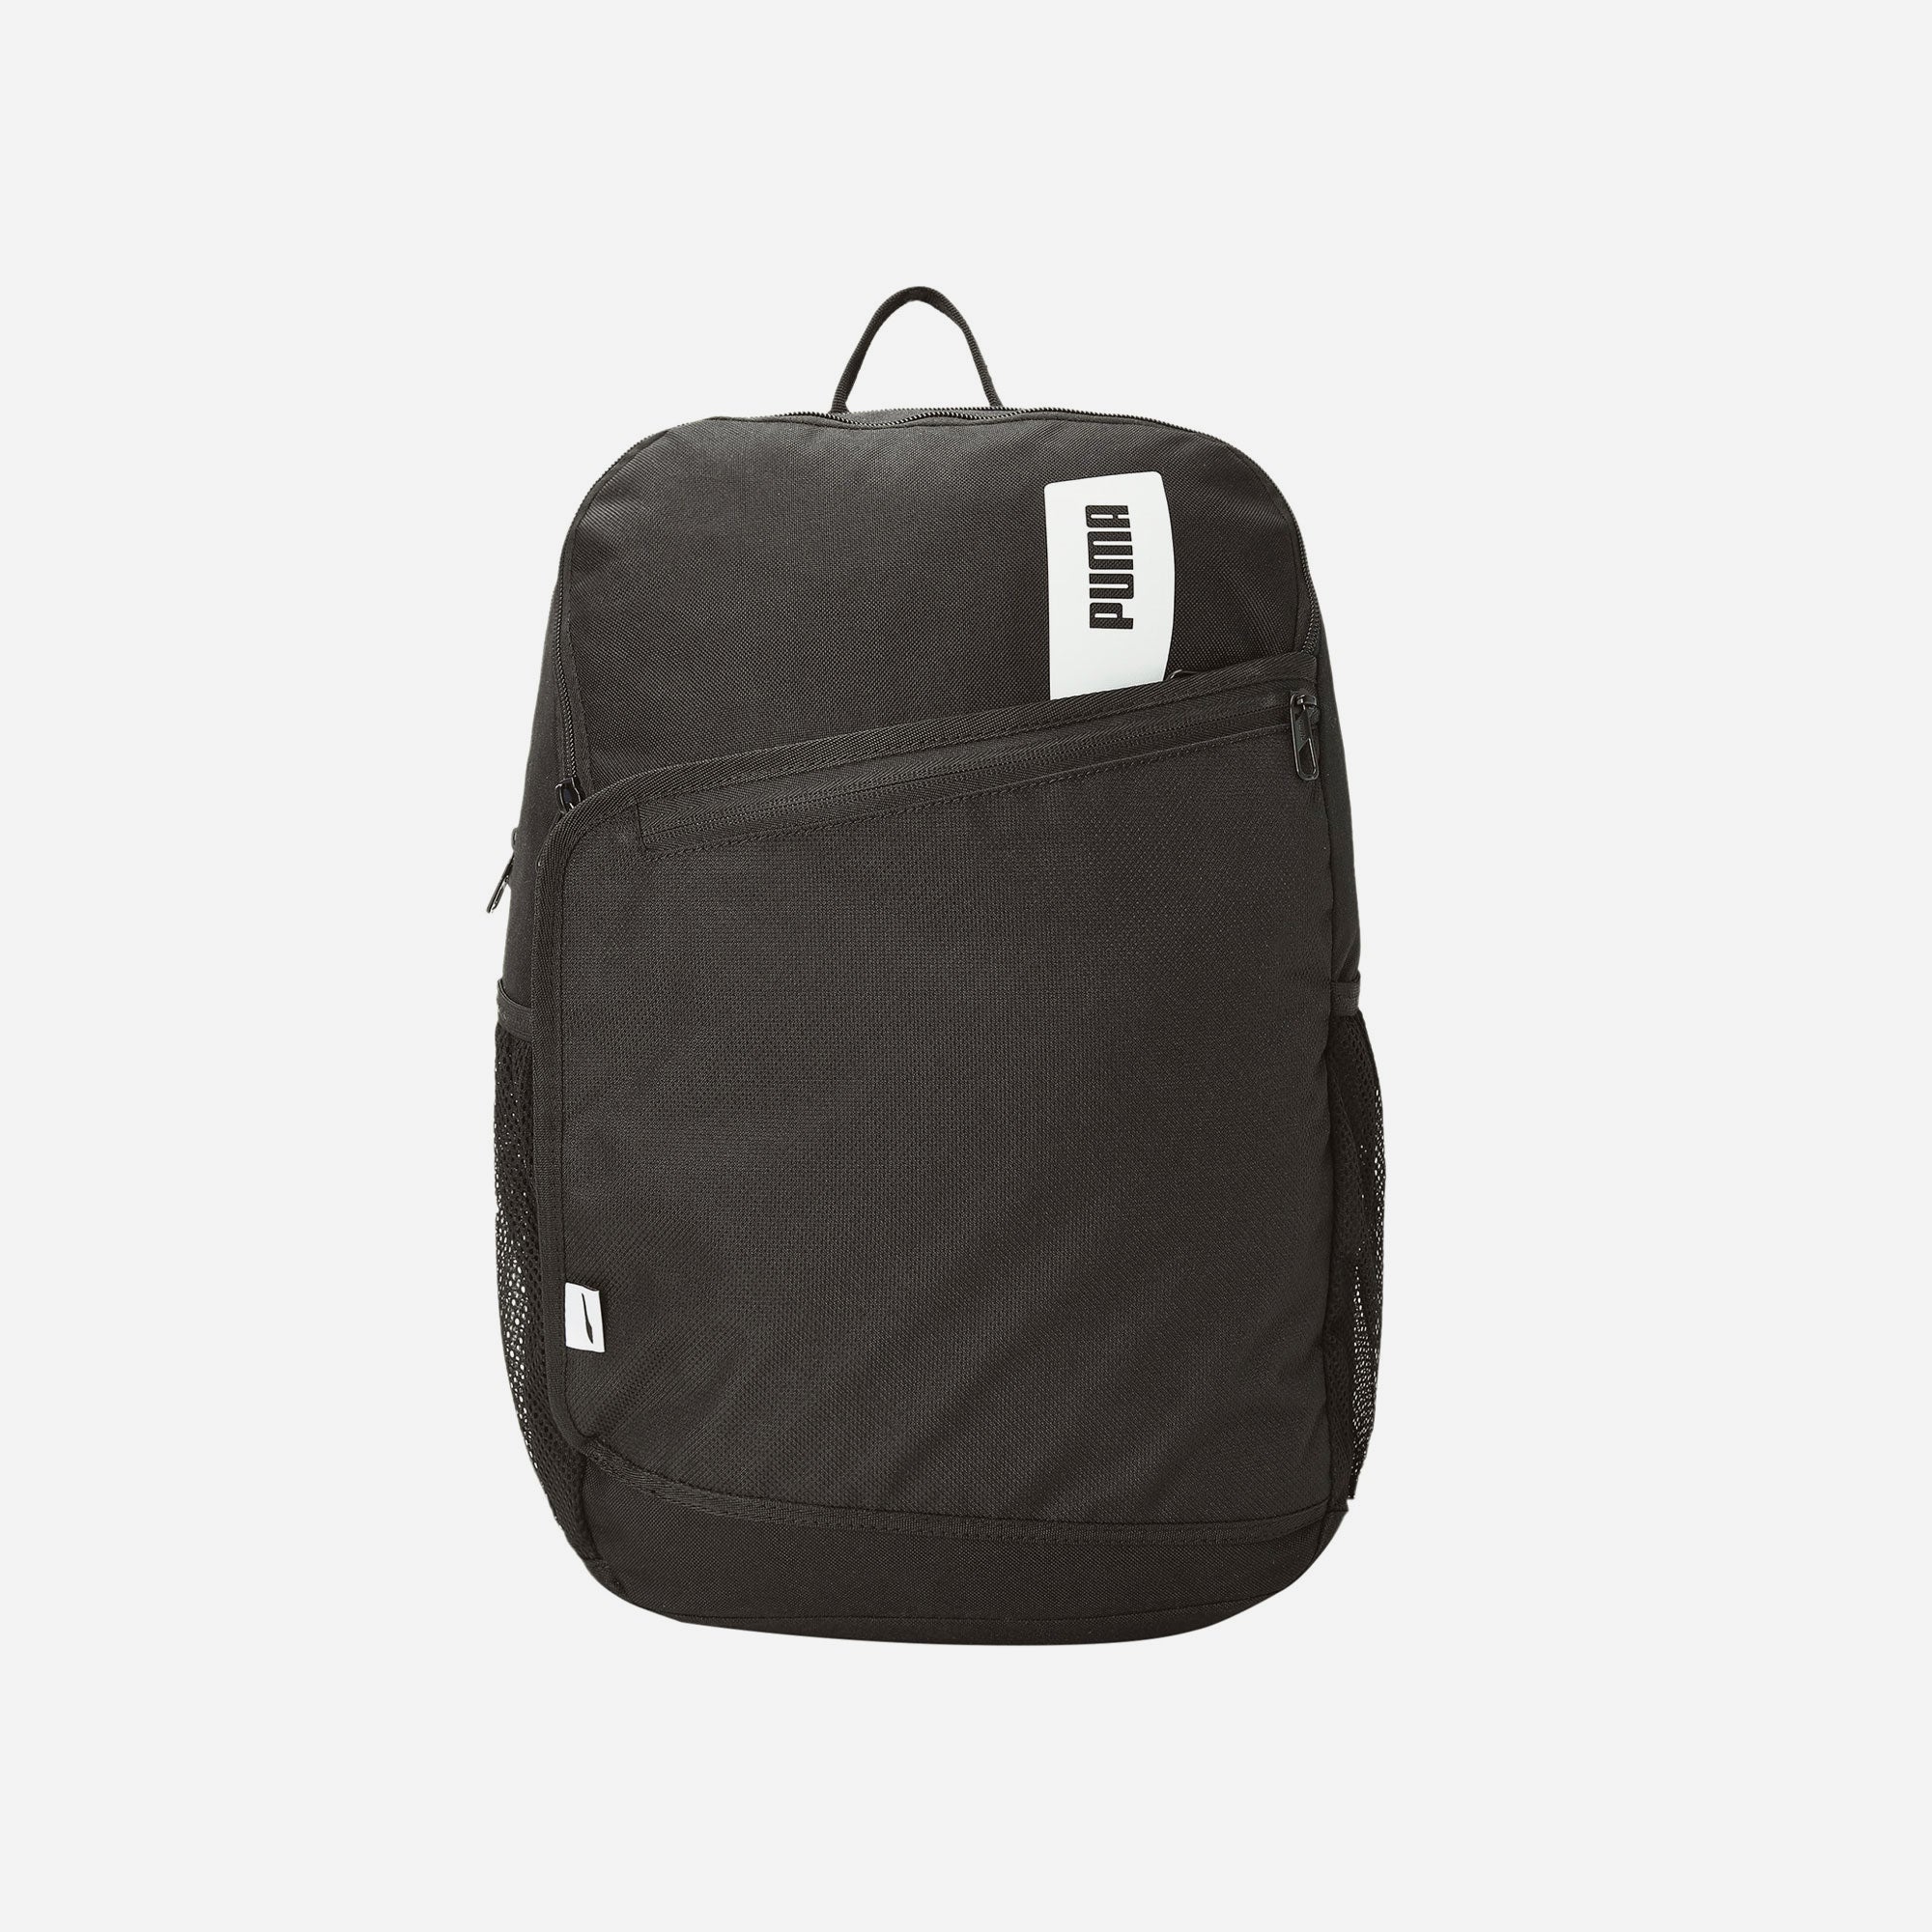 Túi Thể Thao Unisex Puma Deck Backpack Ii hover